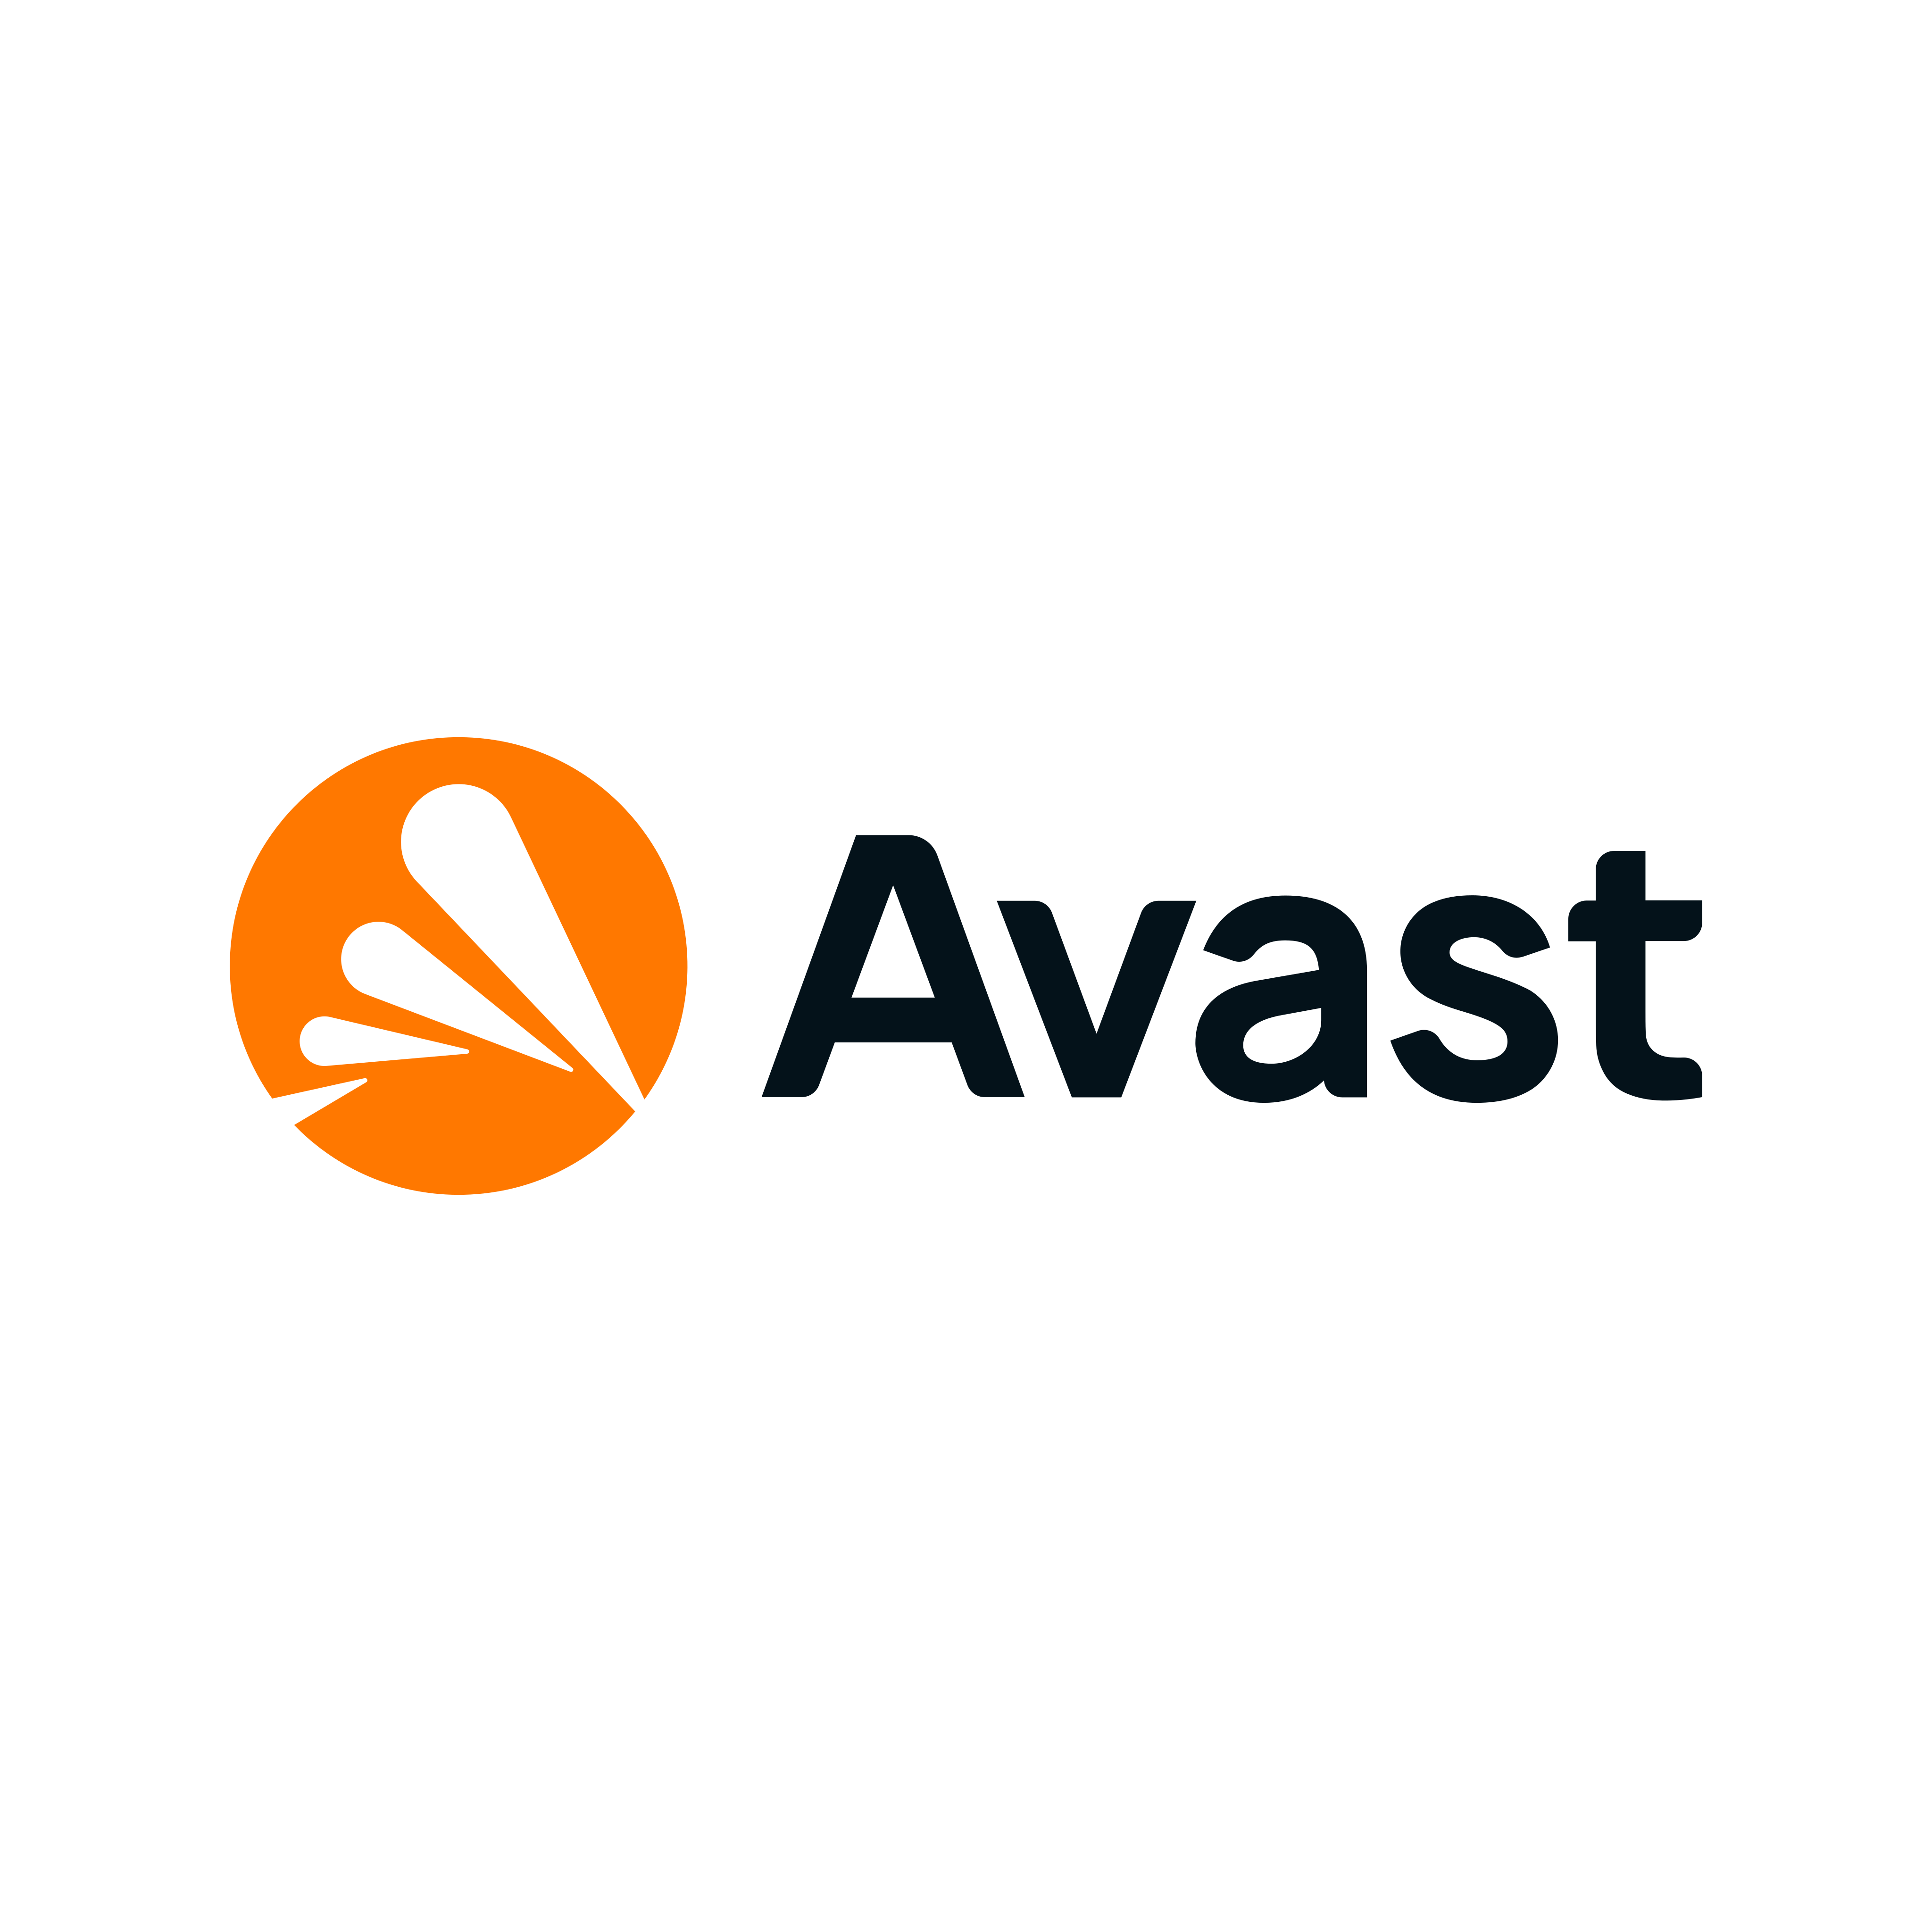 Avast Logo PNG.